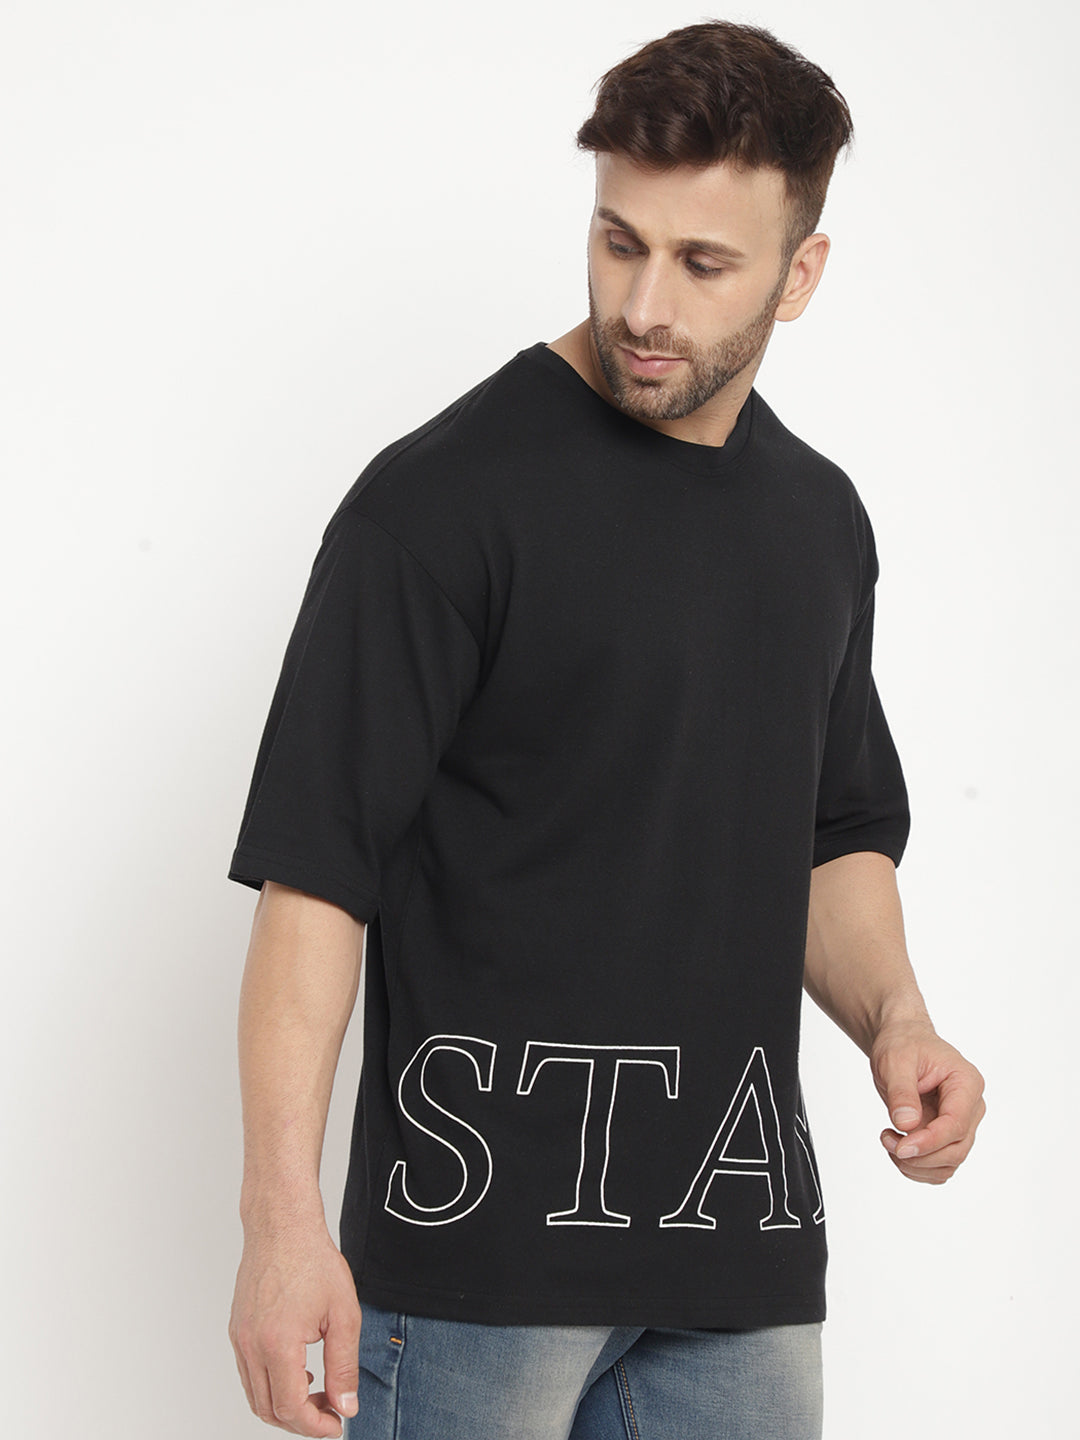 Oversized Black "Stay"  T-Shirt